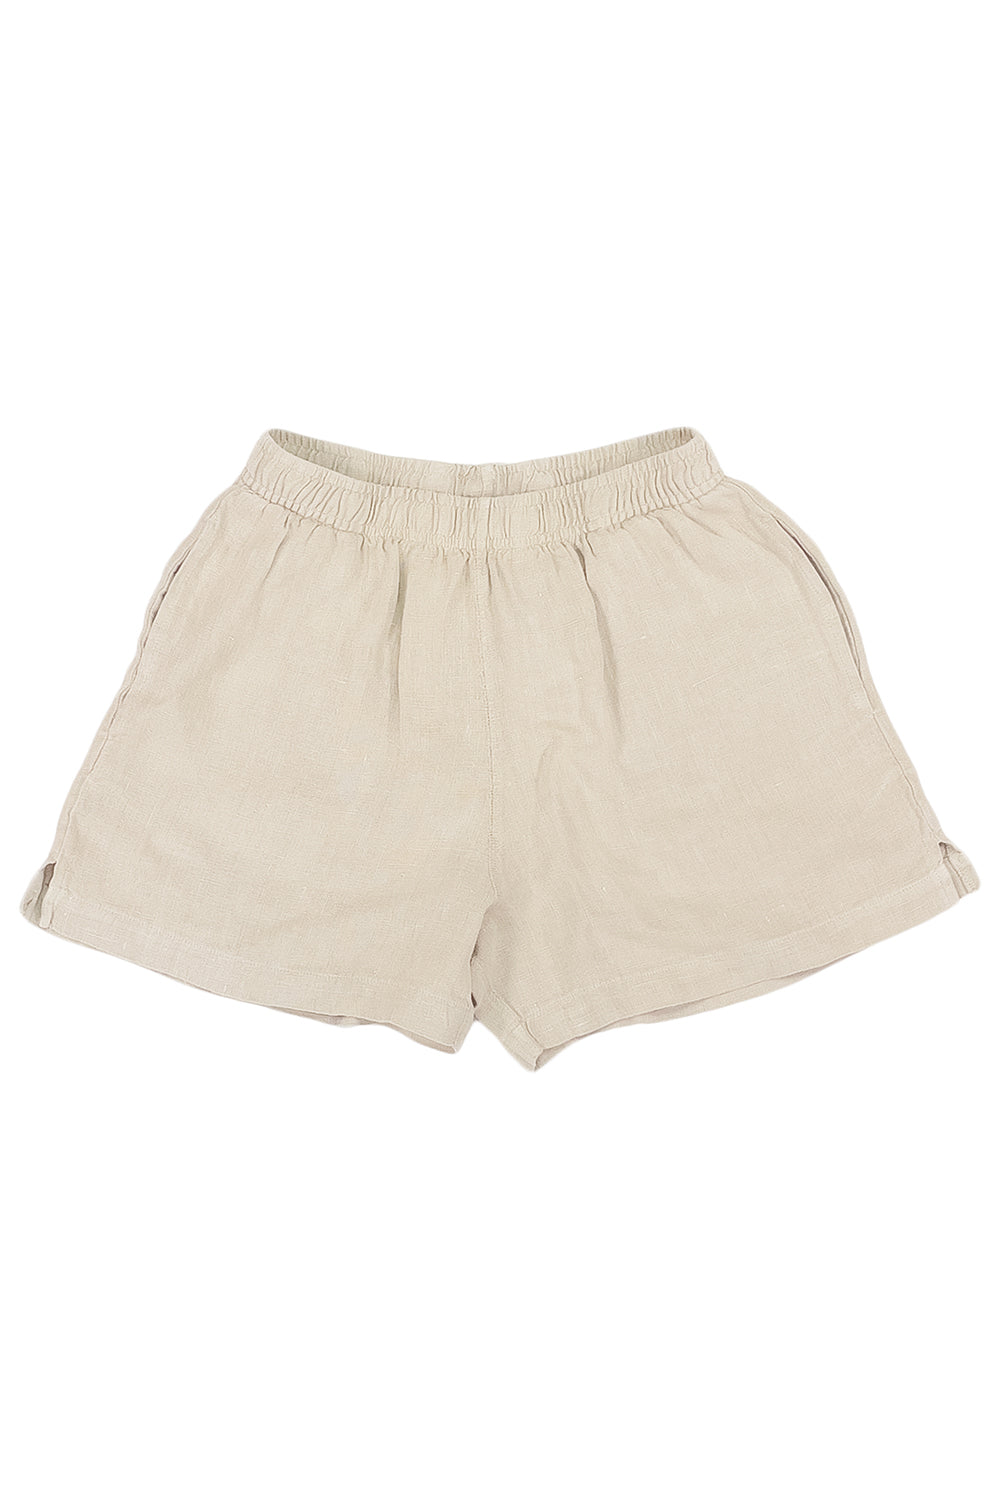 Velocity Shorts in Bamboo & Organic Cotton - Nomads Hemp Wear